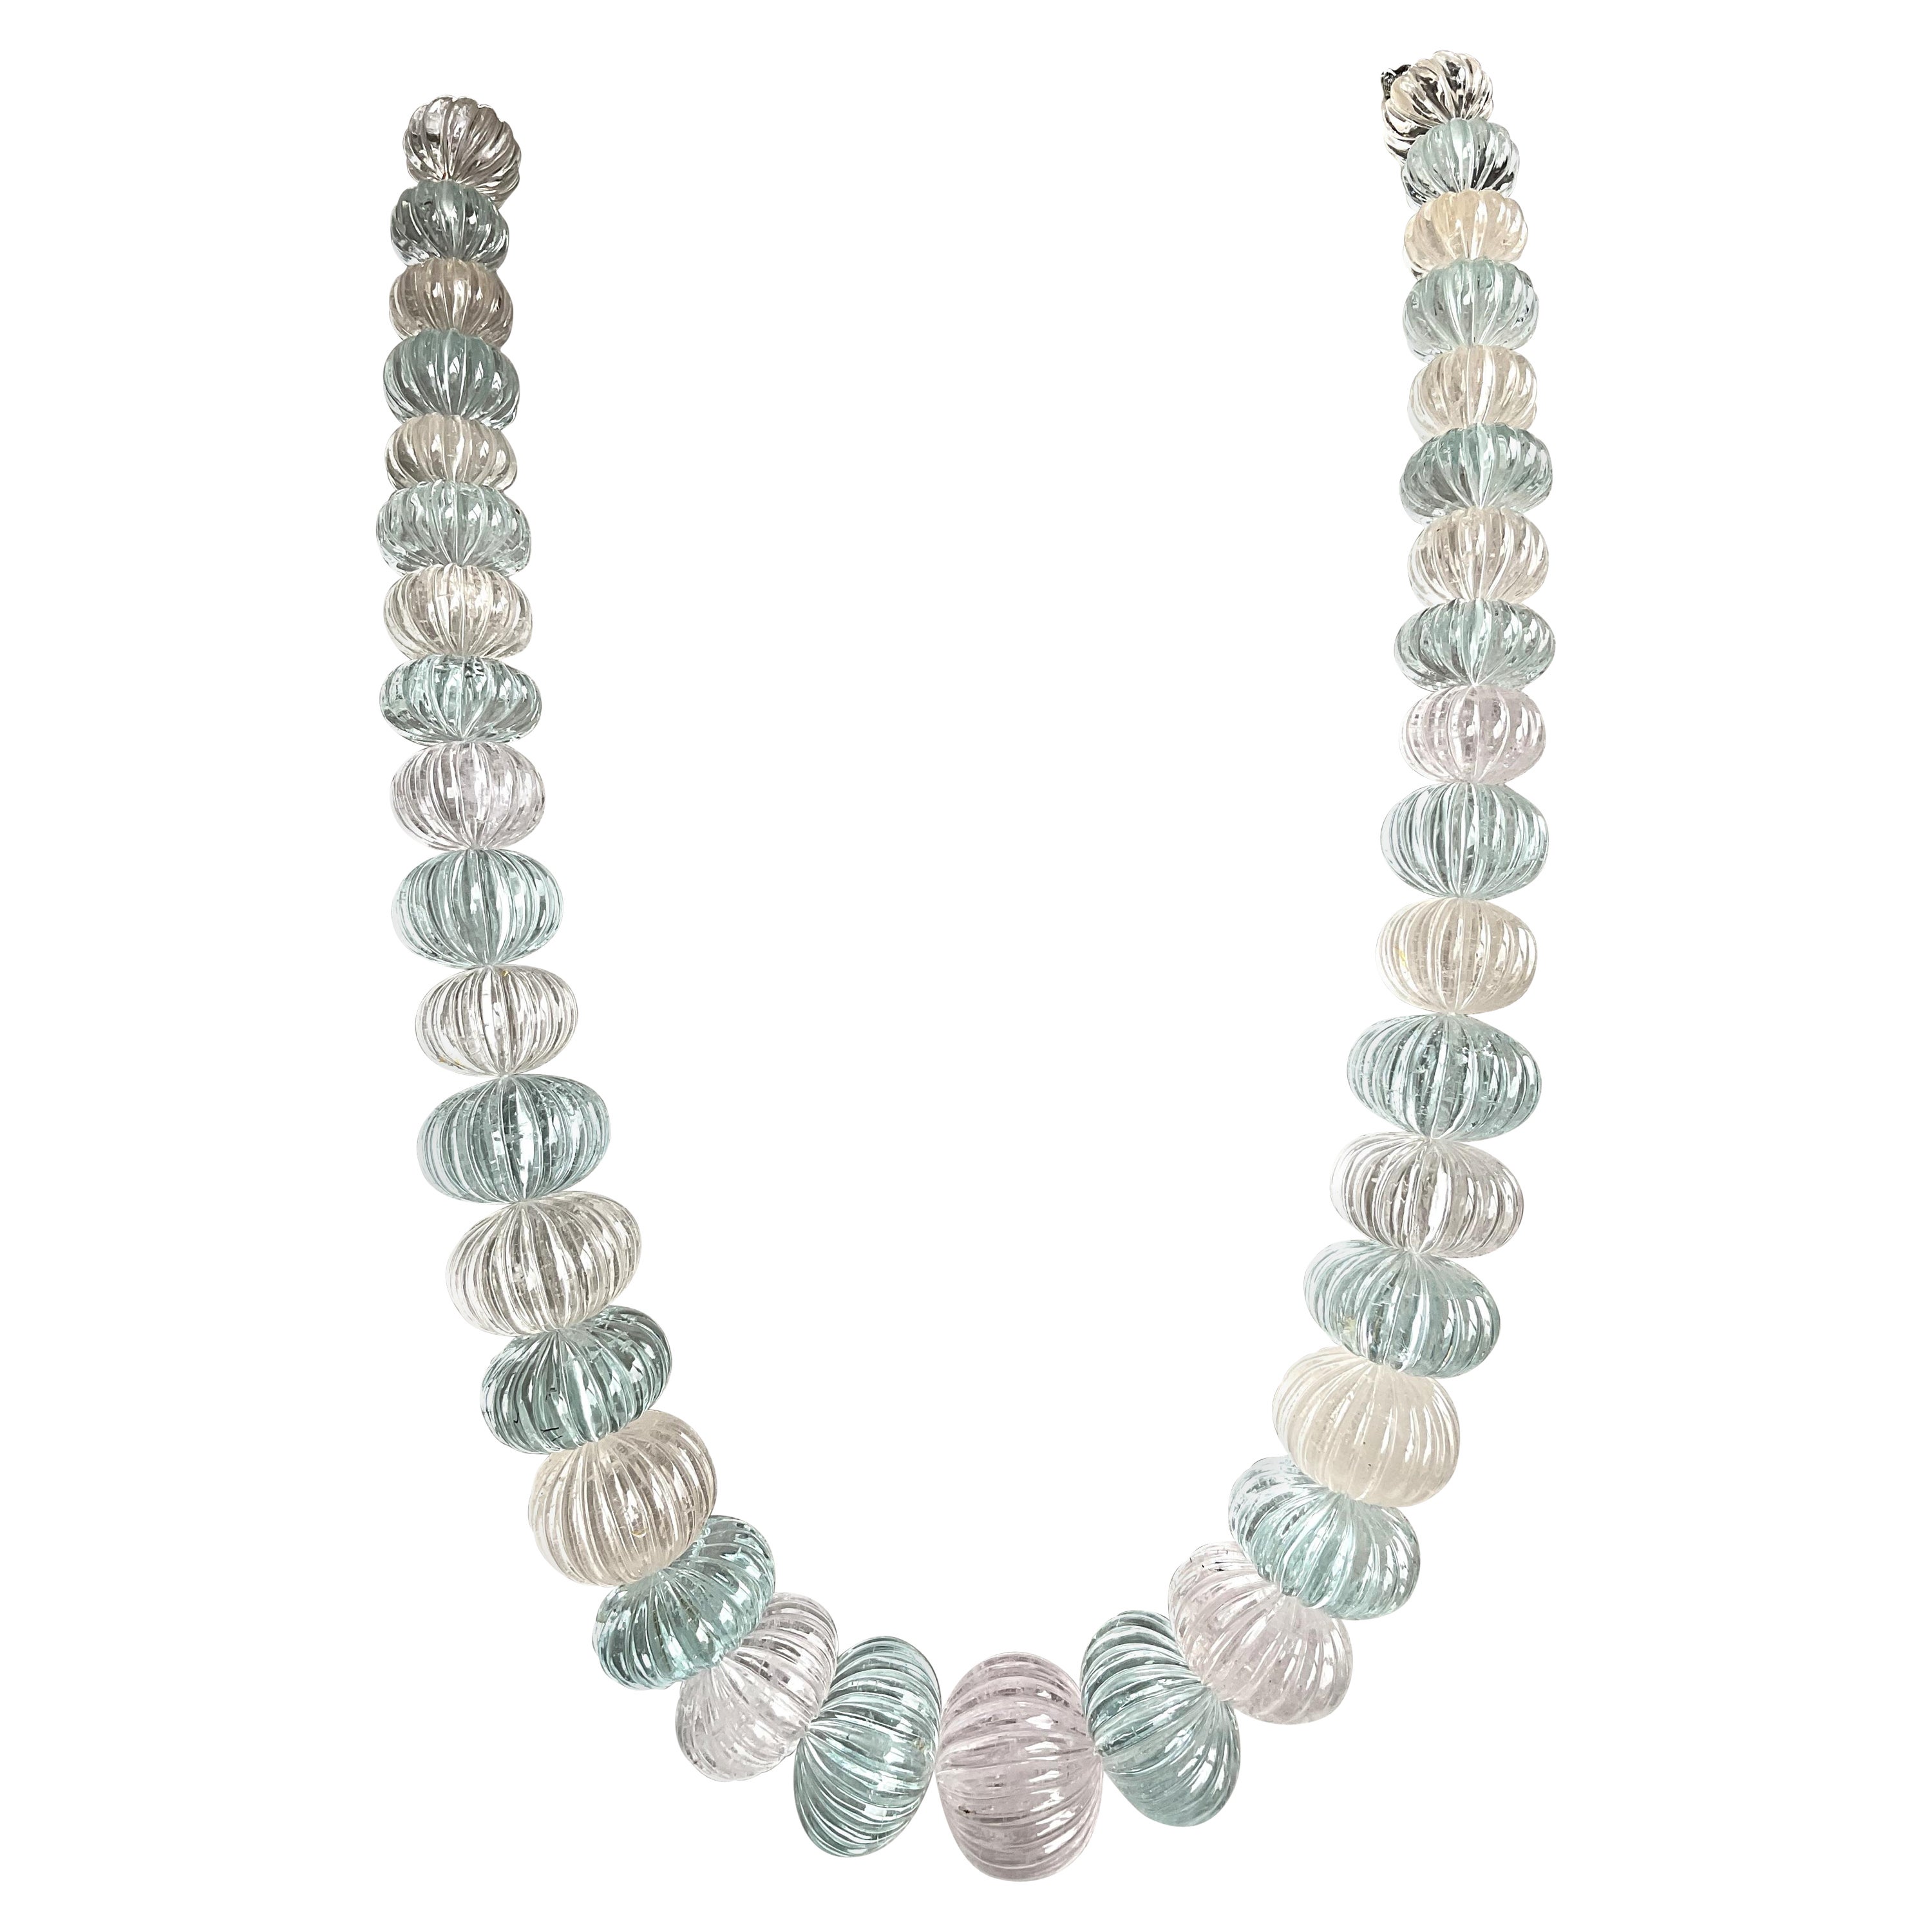 1768.53 Carats grand Aquamarine & Morganite béryl perles cannelées Collier 